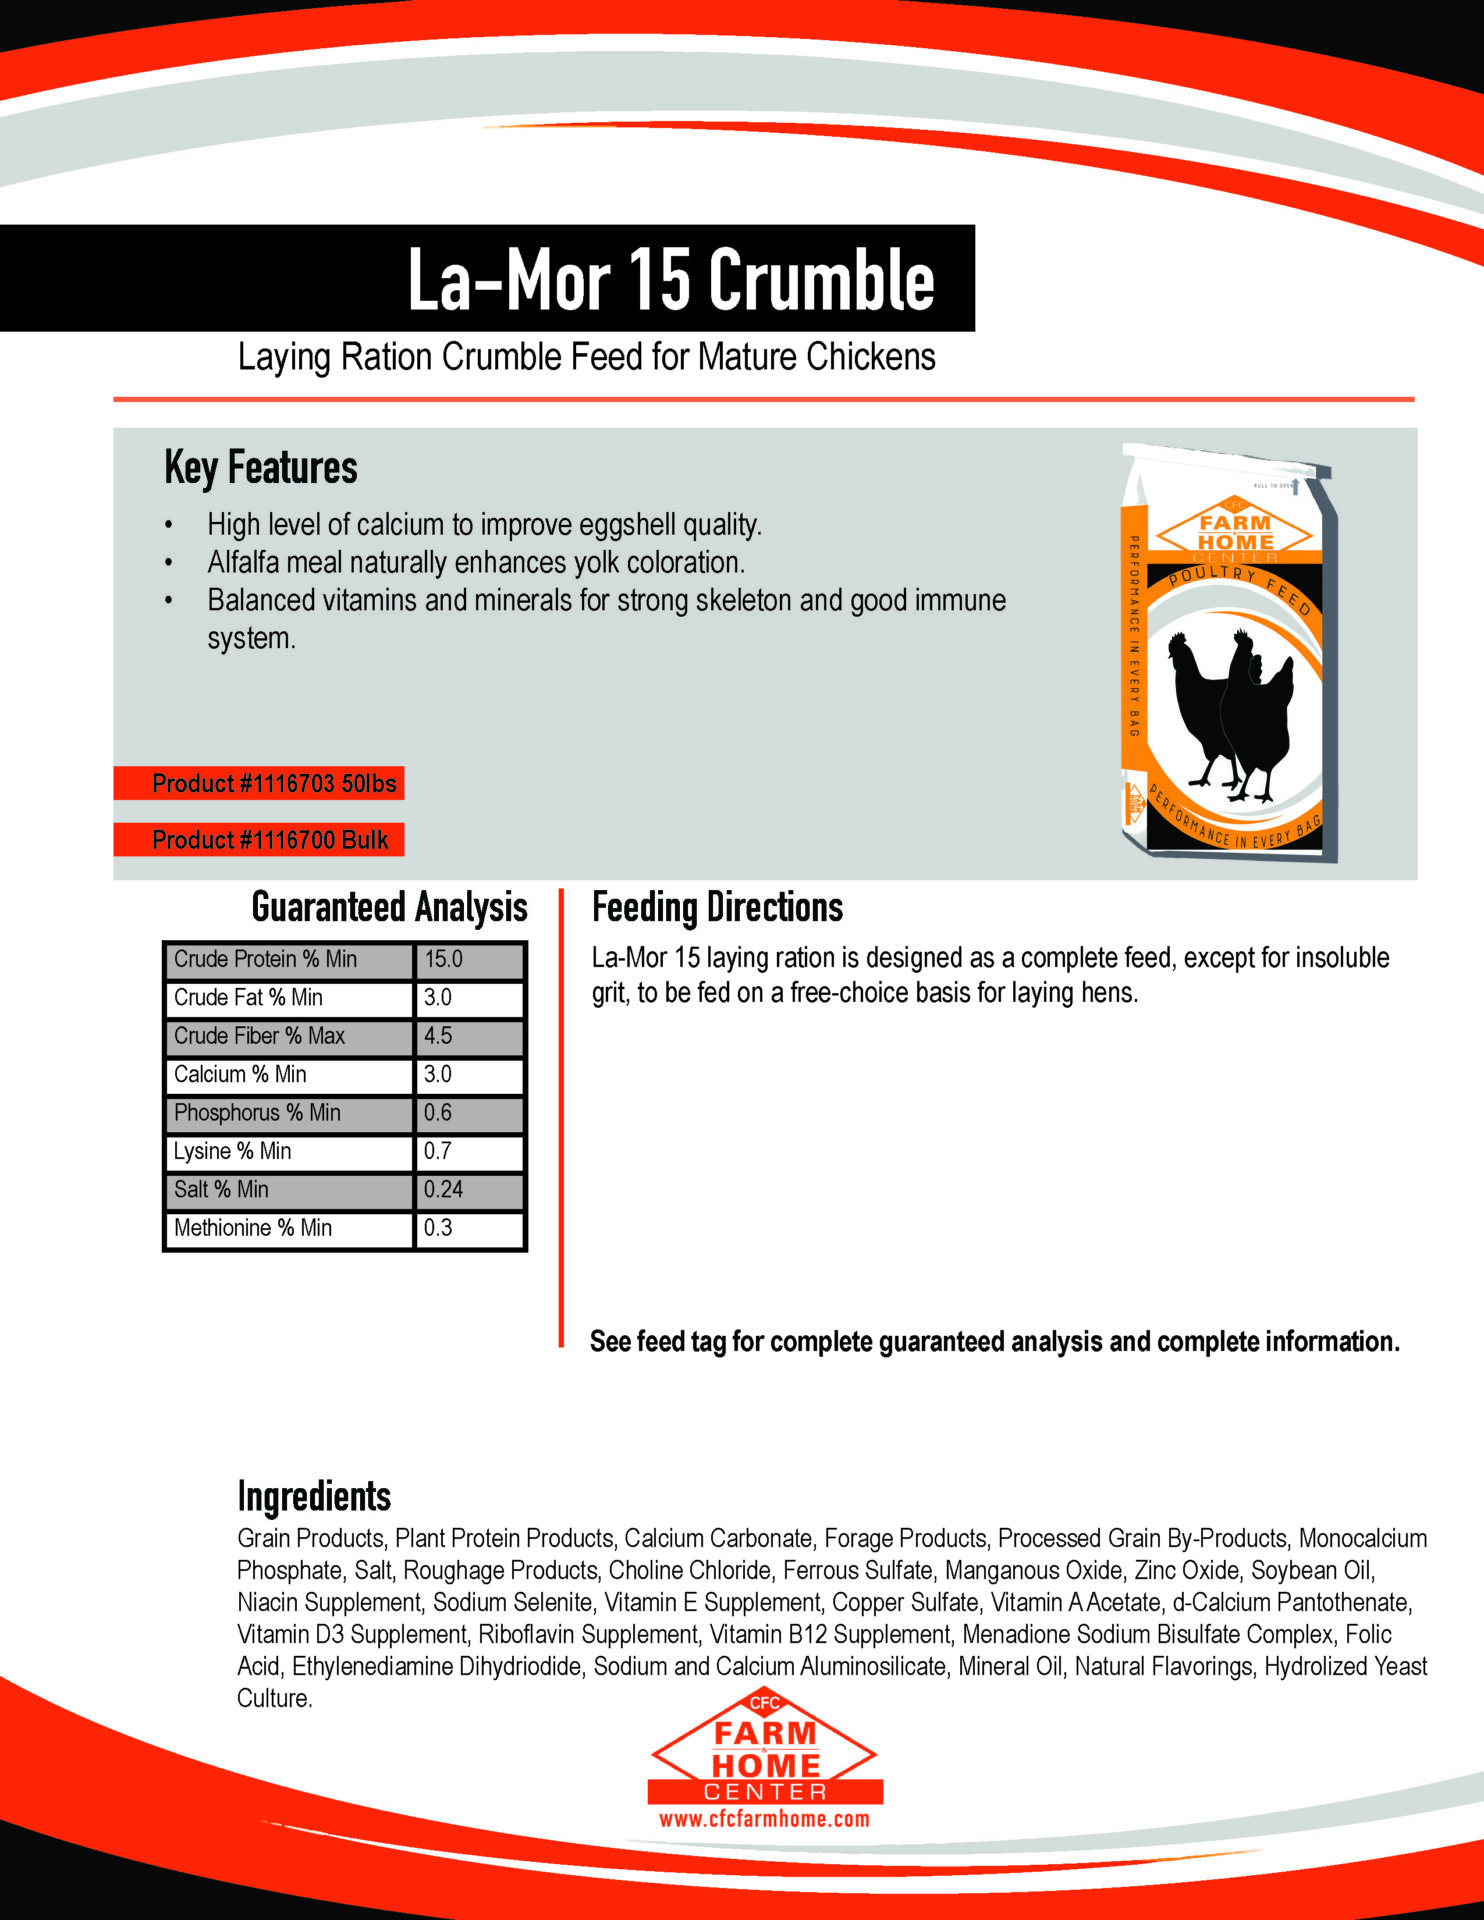 La-Mor 15 Crumble feed spec sheet